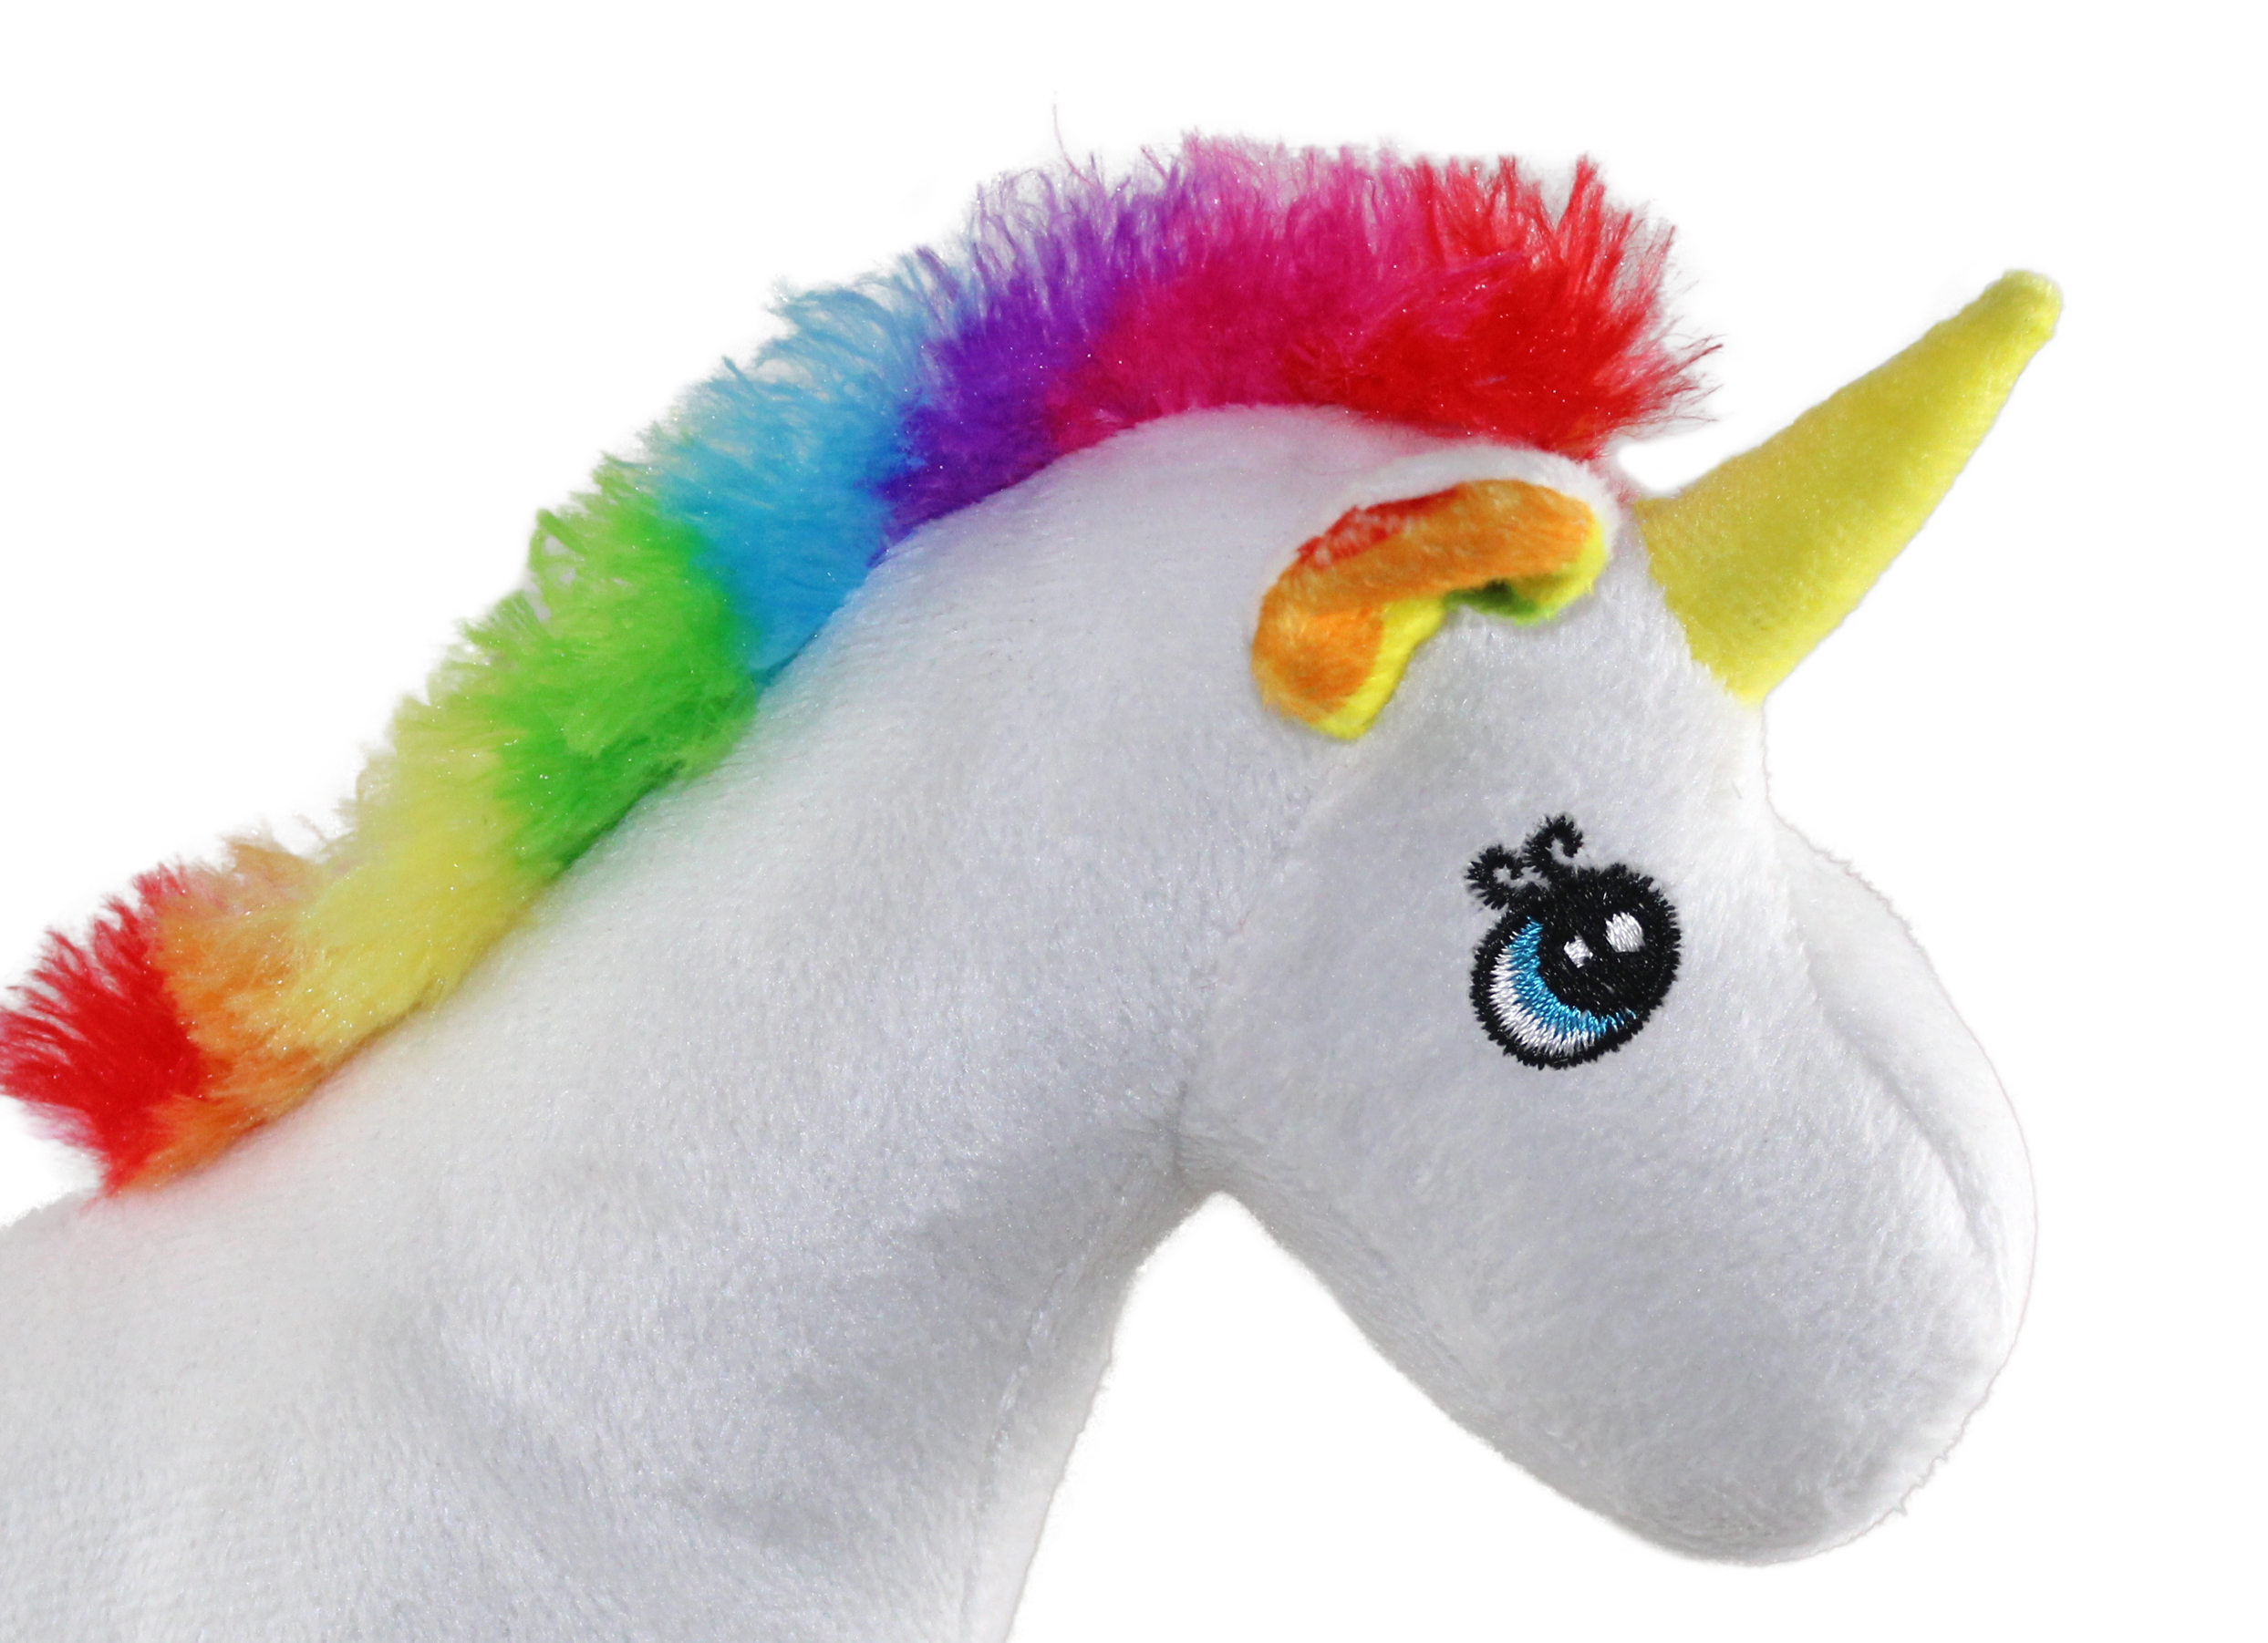 Plush Pal 11" Soft & Fluffy White Unicorn Stuffed Animal Toy with Rainbow Tail And Mane - image 4 of 5